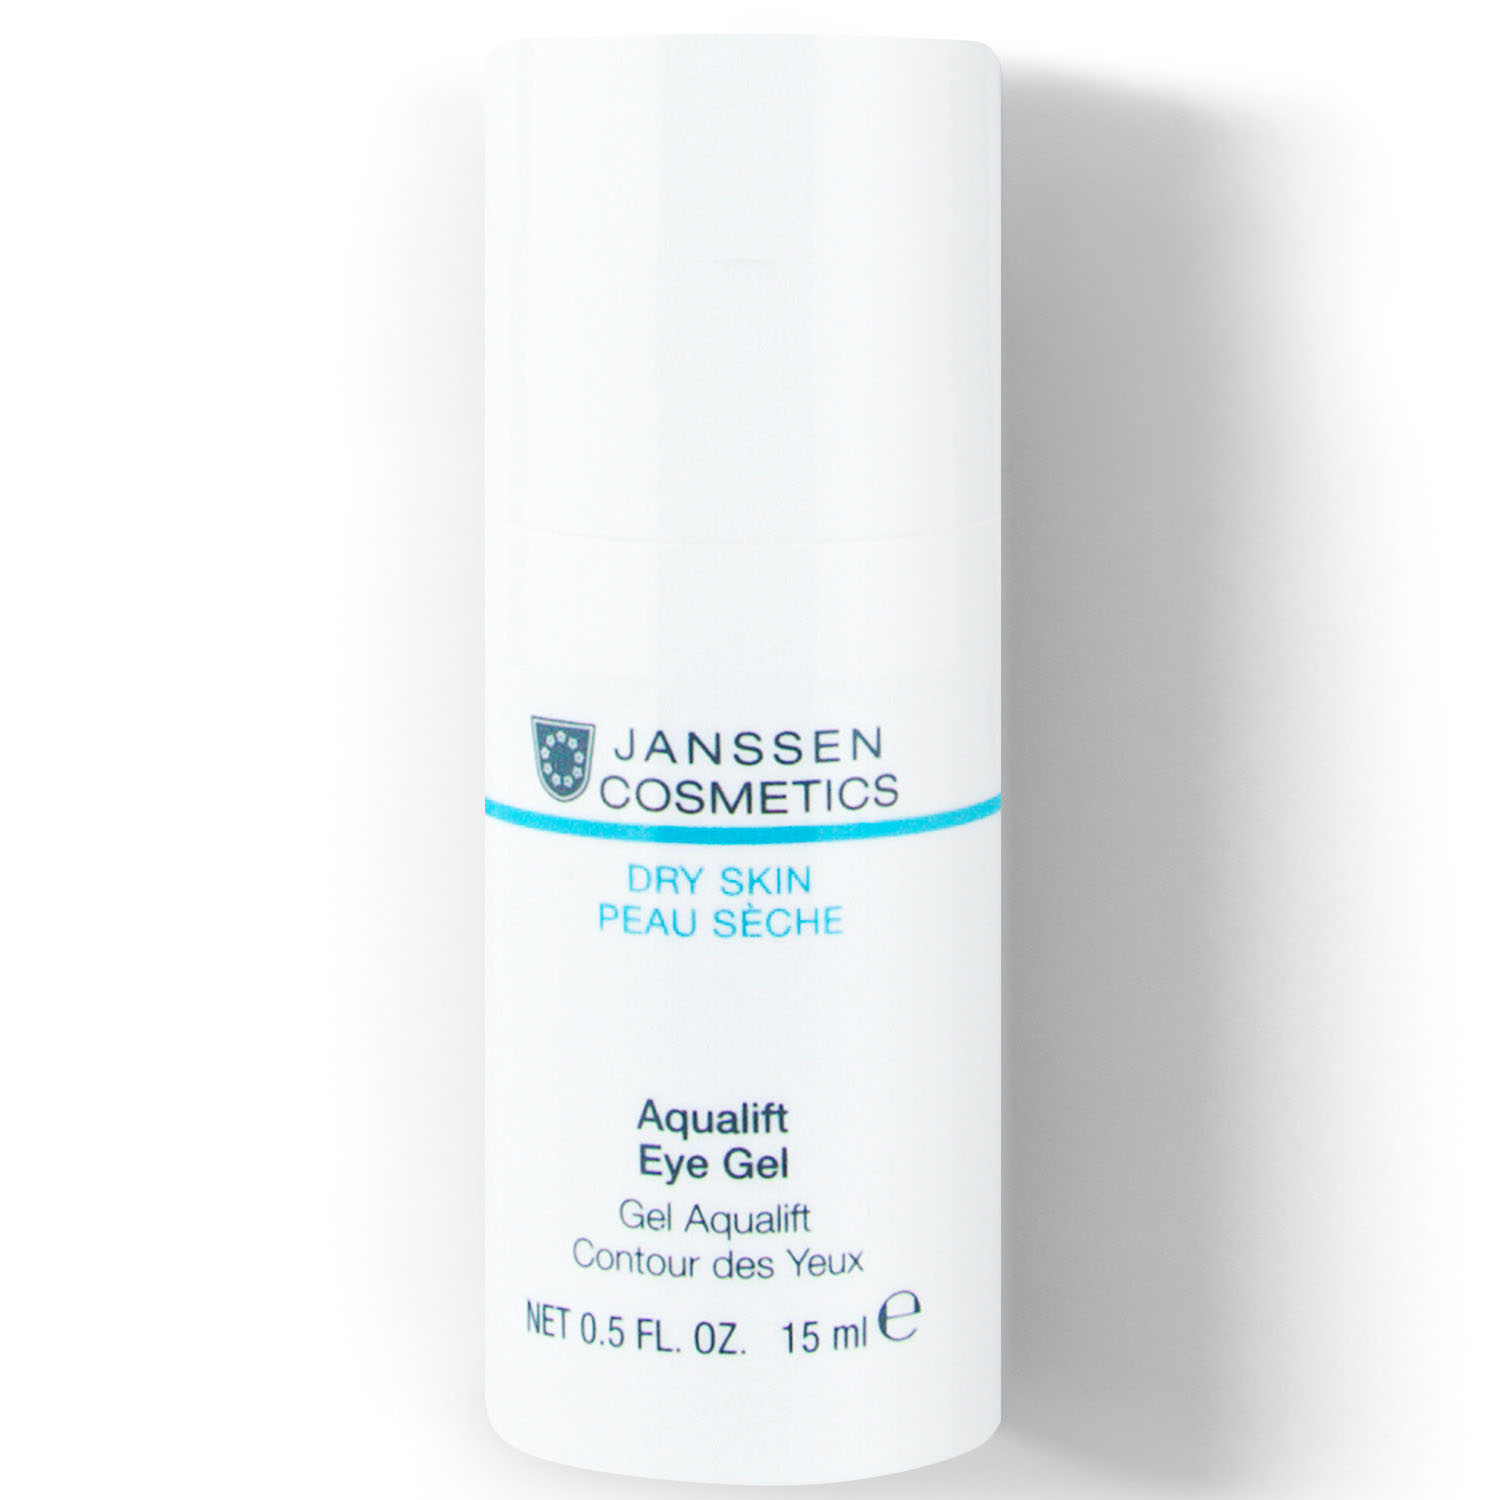 Janssen Cosmetics Ультраувлажняющий лифтинг-гель для контура глаз Aqualift Eye Gel, 15 мл (Janssen Cosmetics, Dry Skin) янссен ультраувлажняющий лифтинг гель для контура глаз 15мл